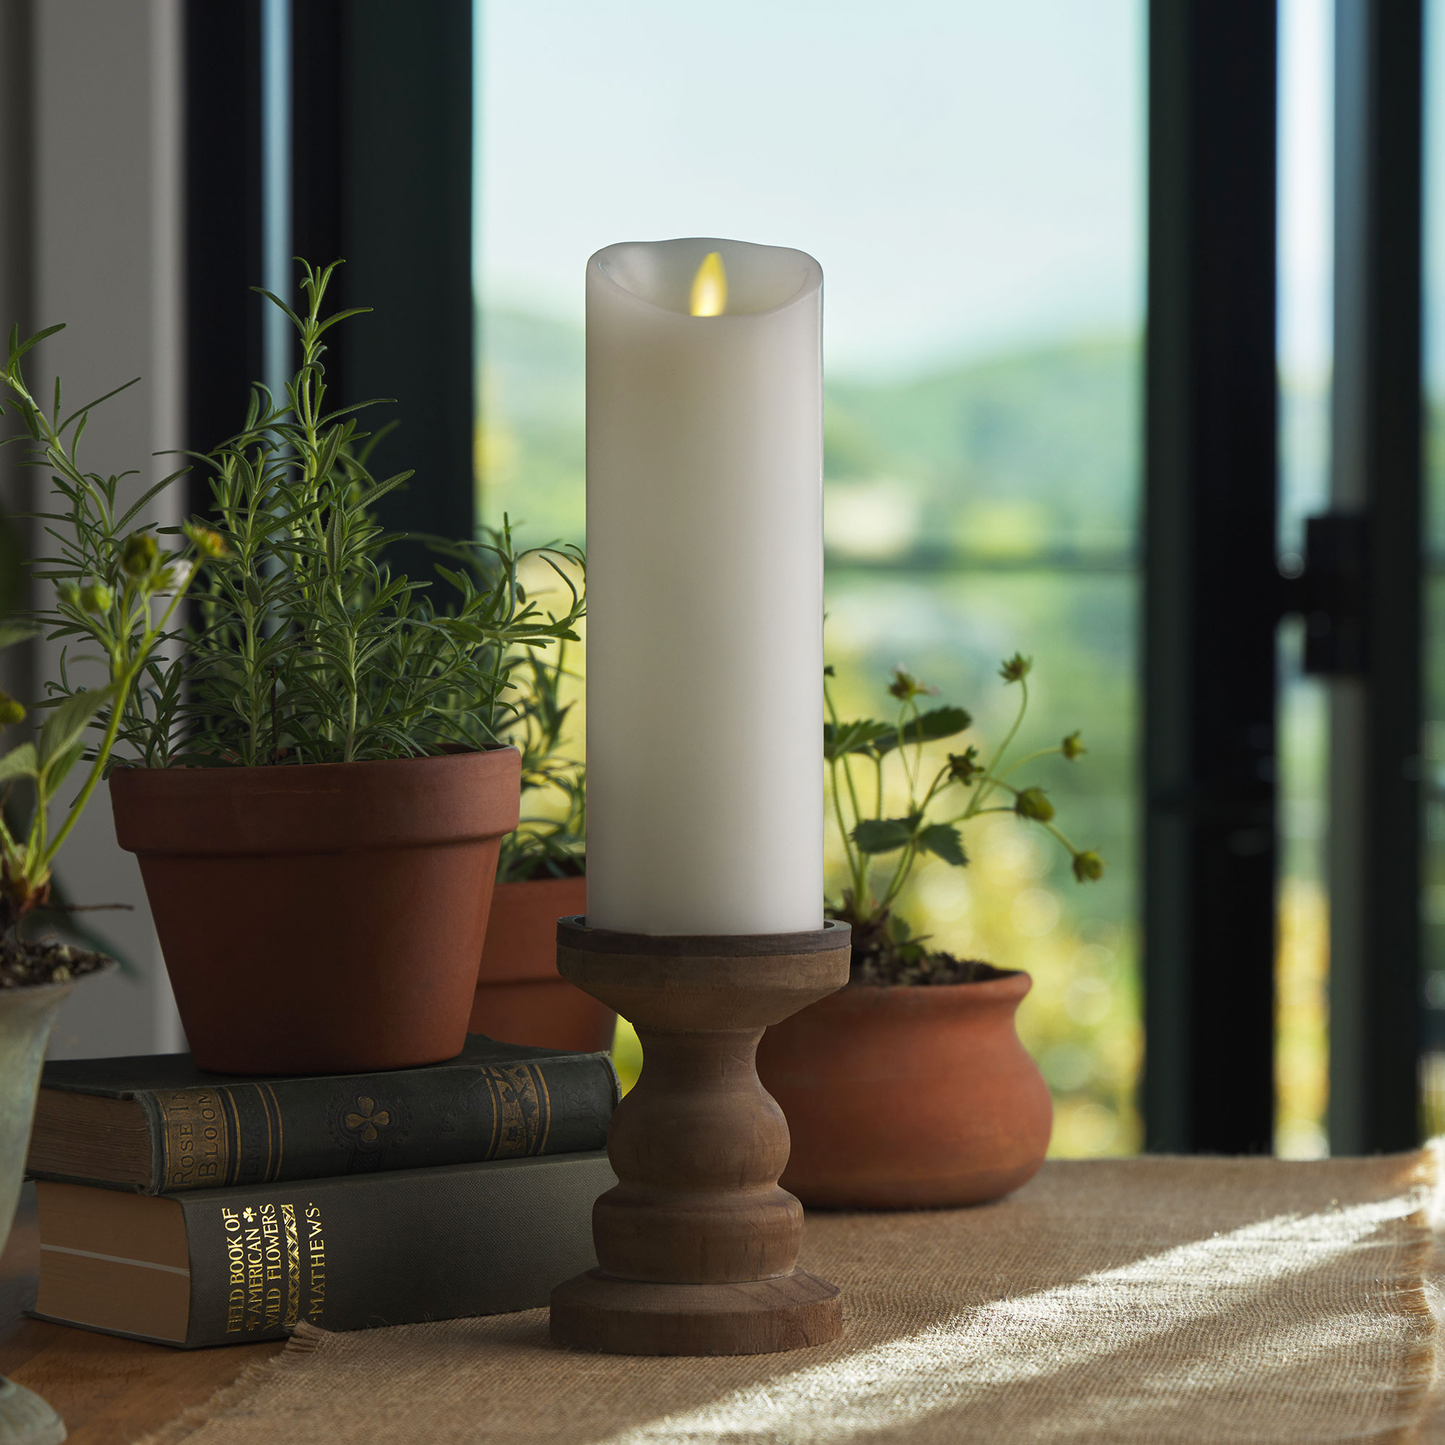 an image of Luminara's flameless white candle pillars